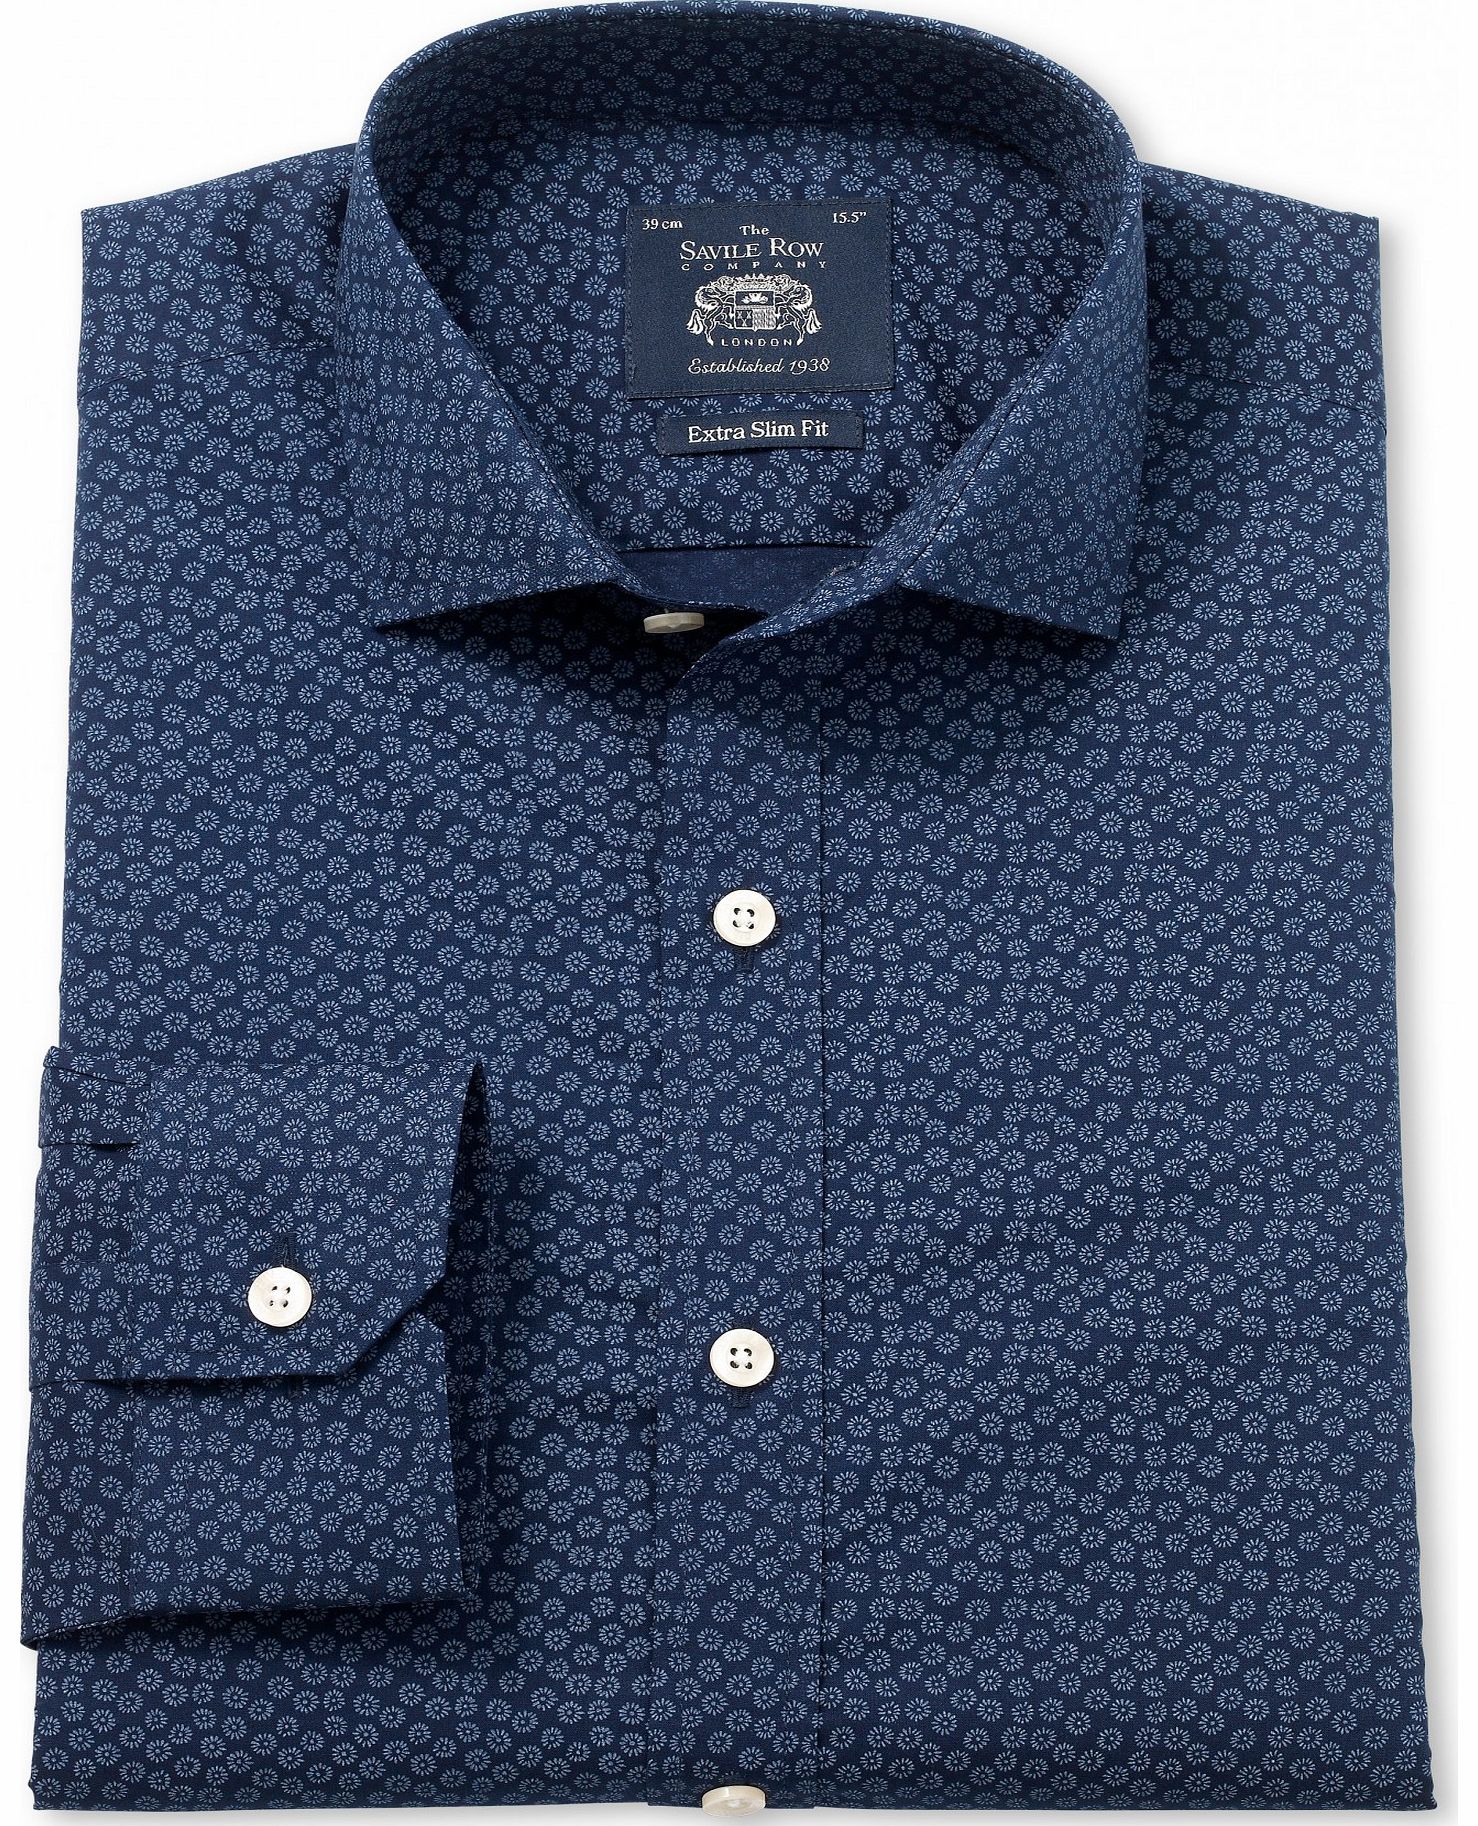 Navy Blue Printed Extra Slim Fit Shirt 16``